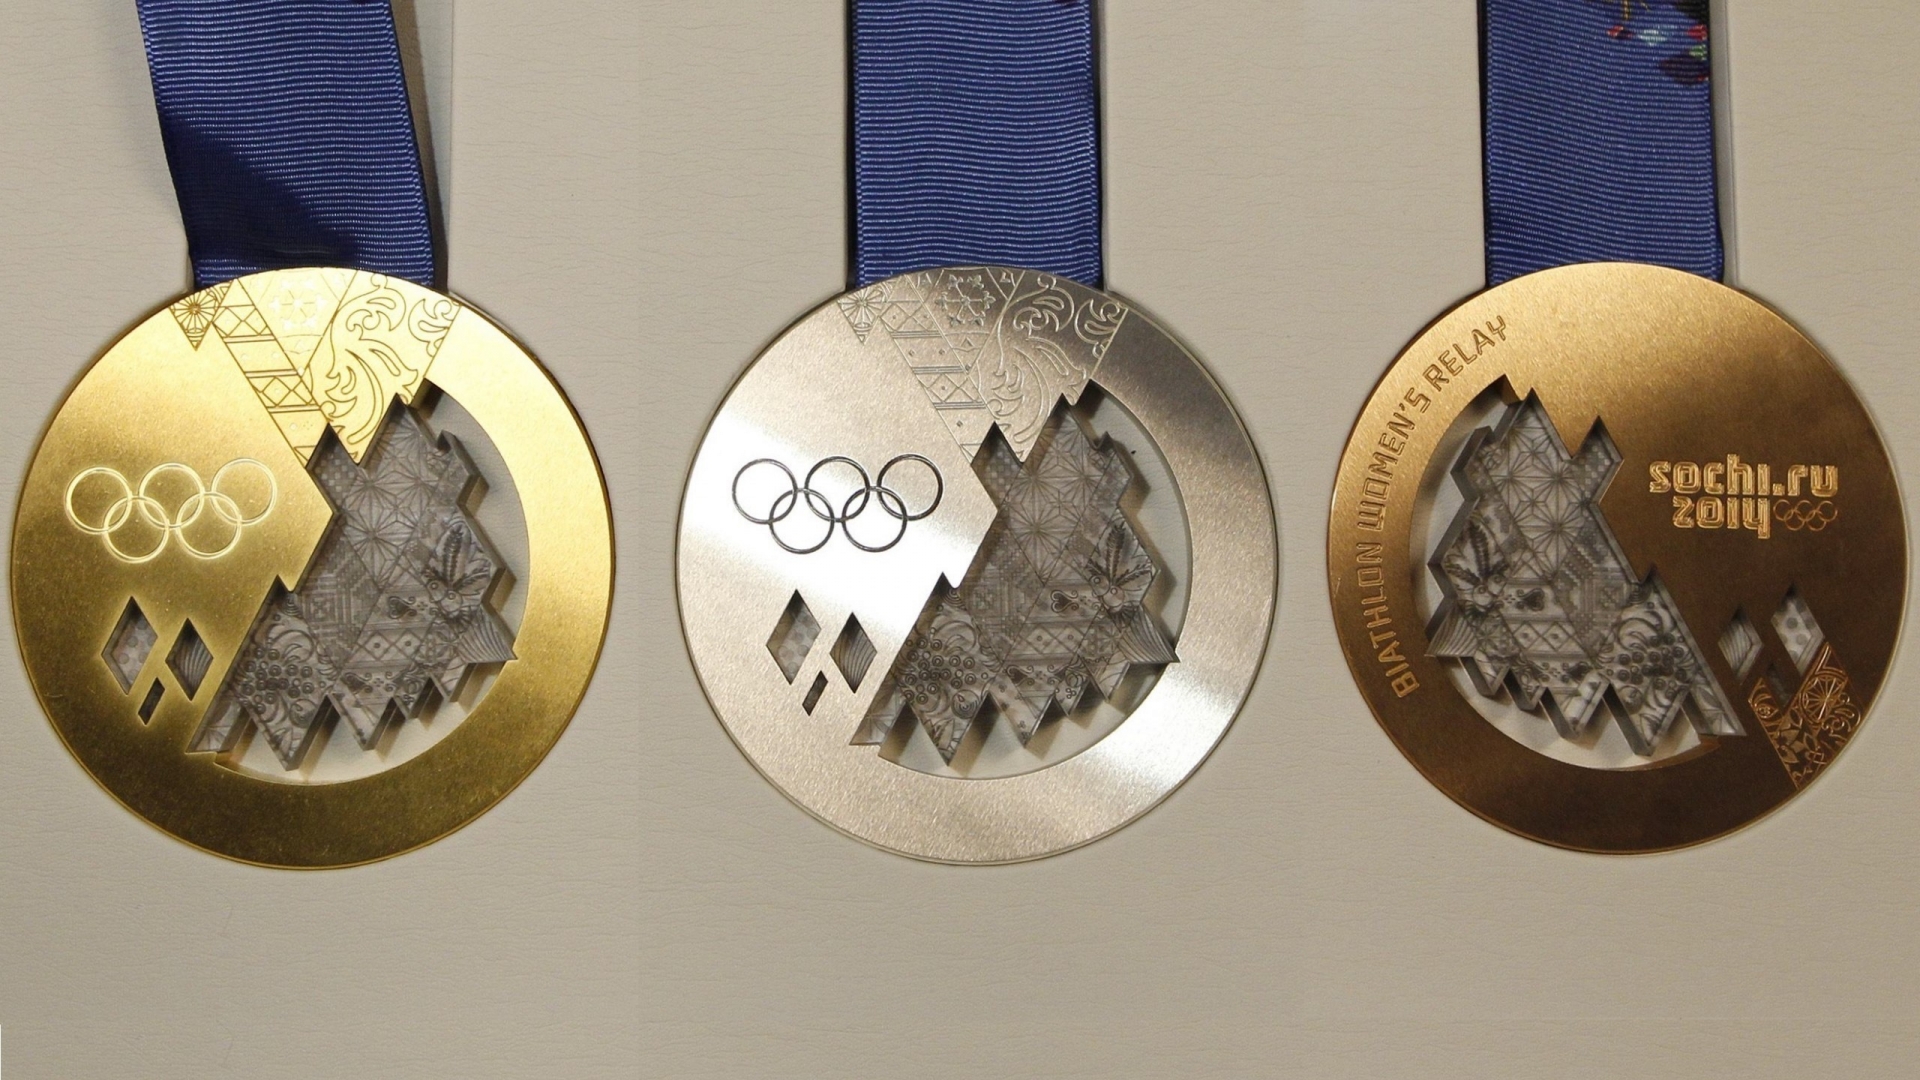 Sochi 2014 Medals for 1920 x 1080 HDTV 1080p resolution